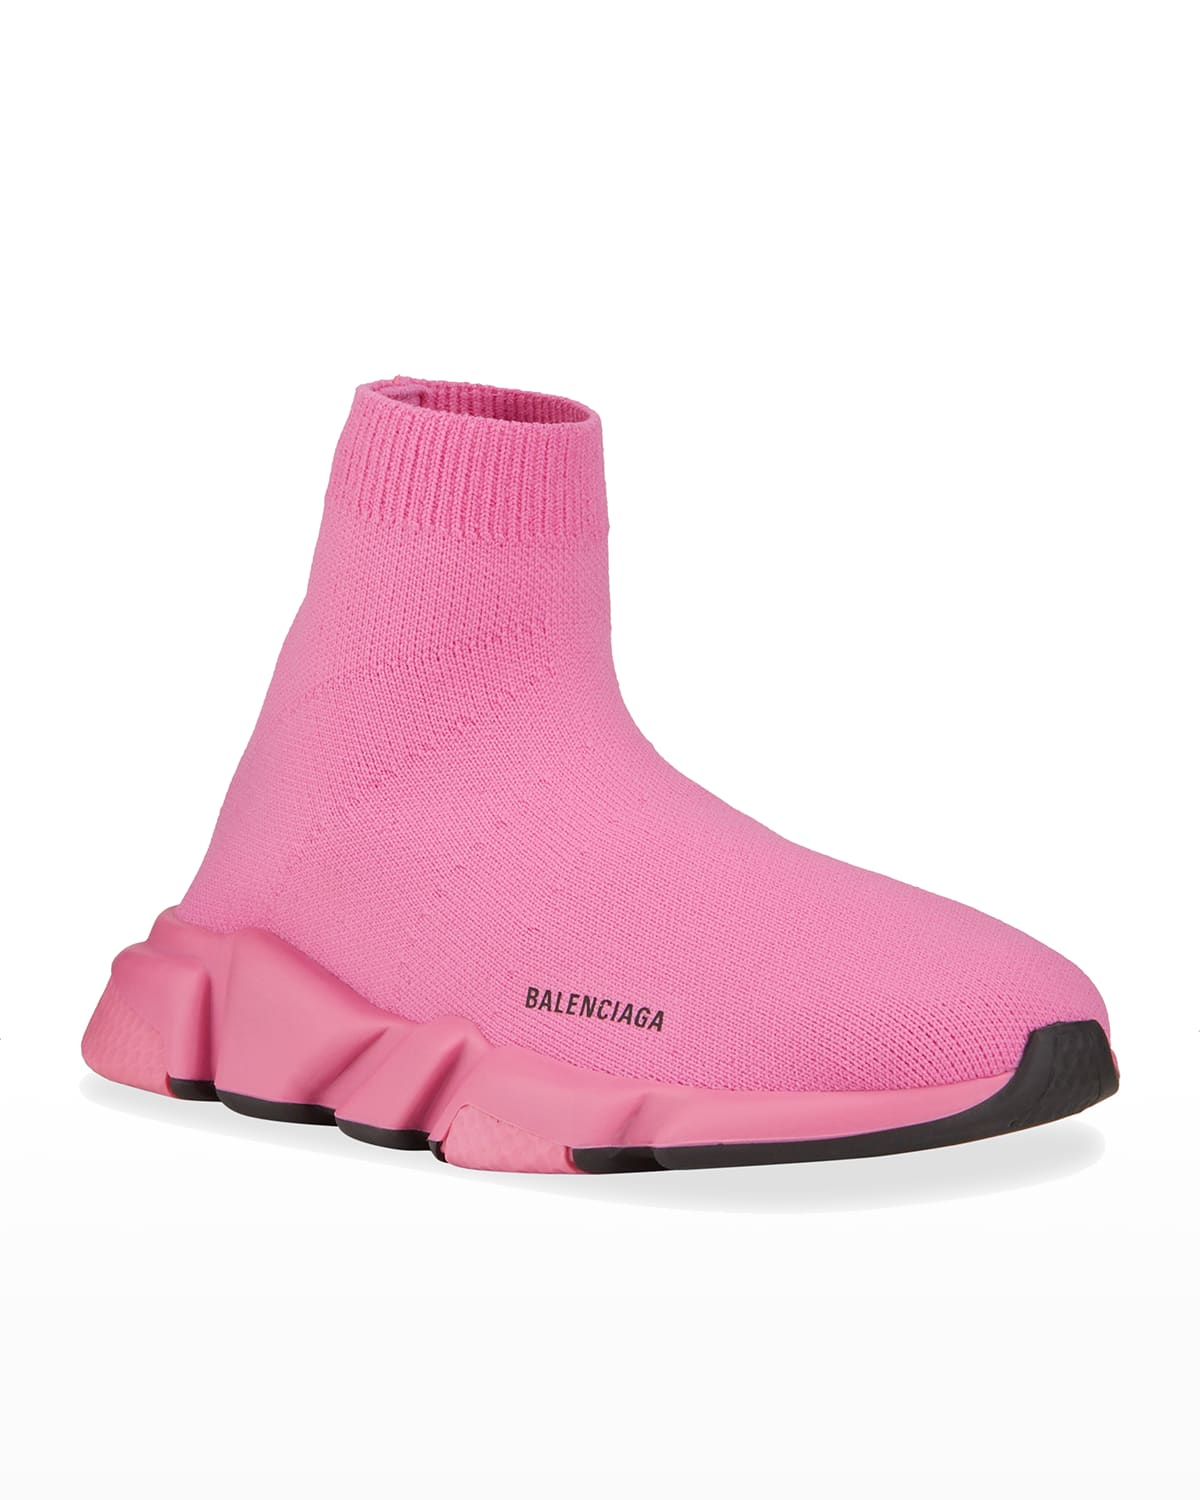 Kid's Knit Sock Trainer Sneakers, Pink